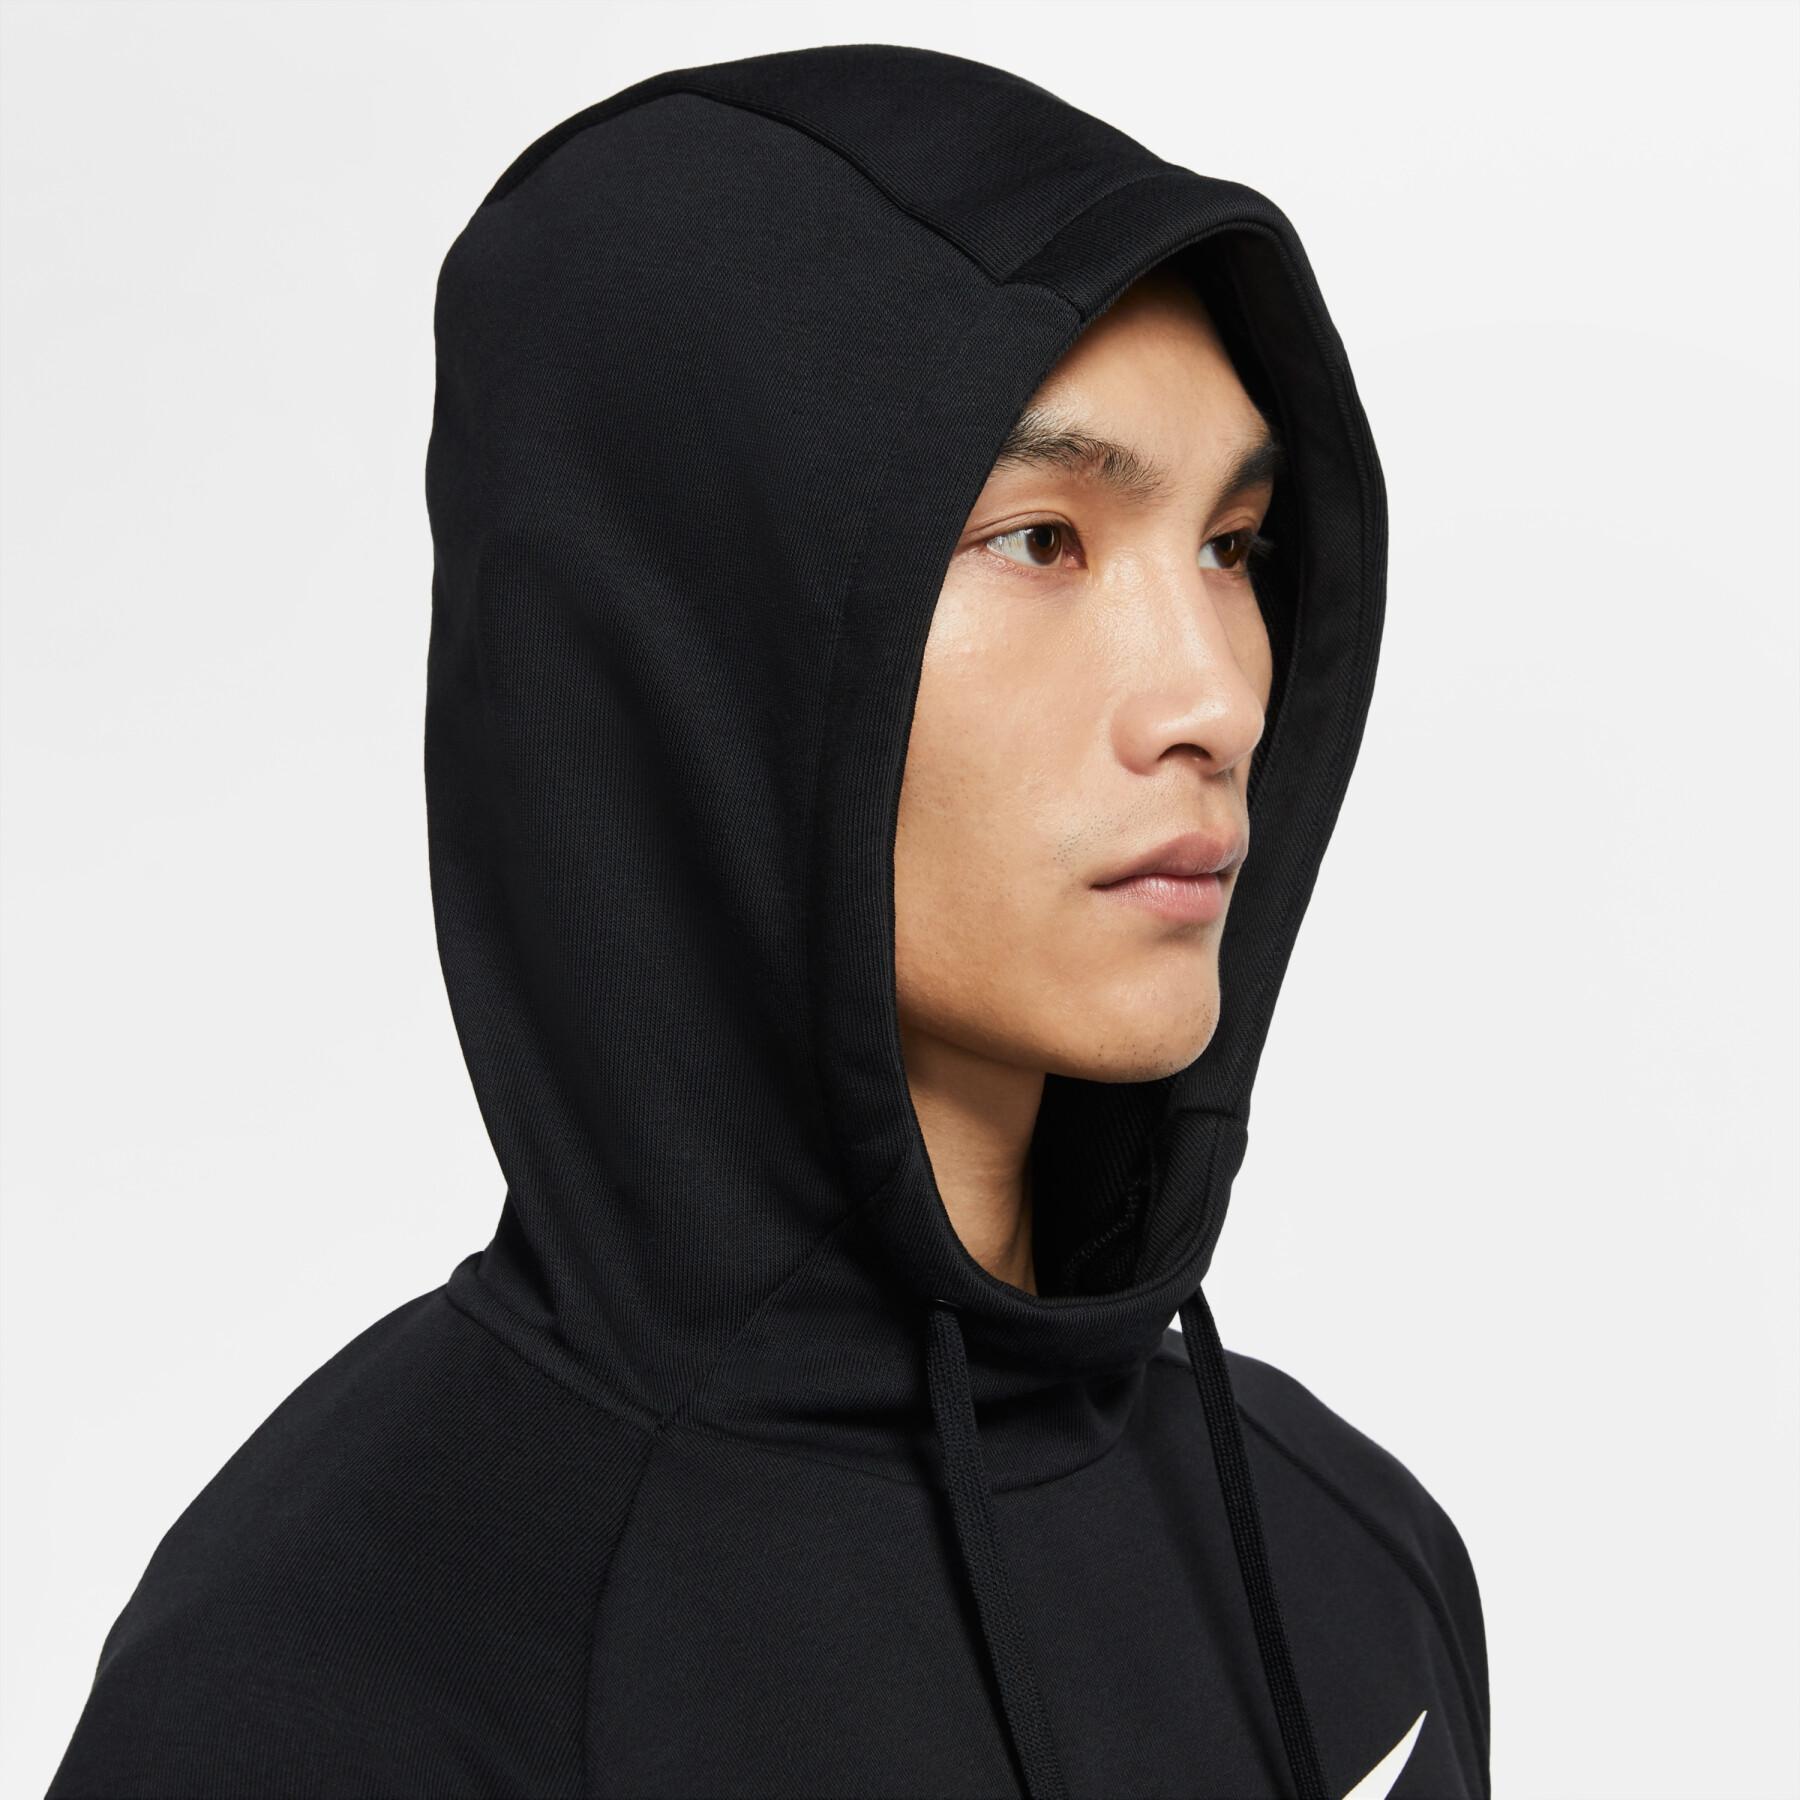 Sweatshirt à capuche Nike dri-fit